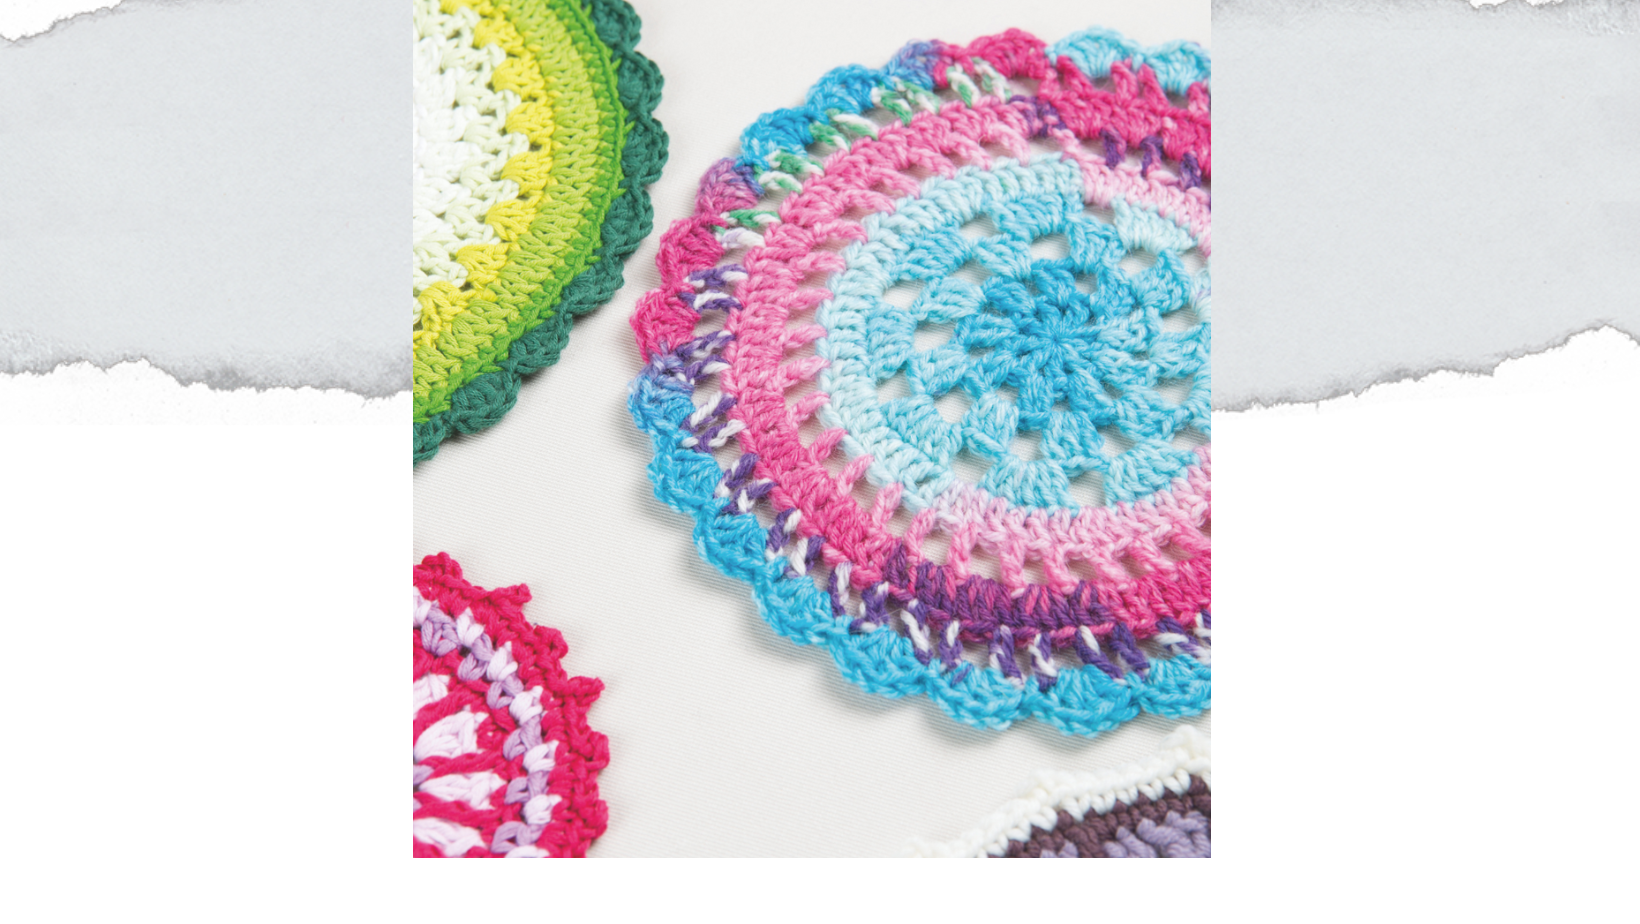 crochet mandalas showing yarn colour combinations